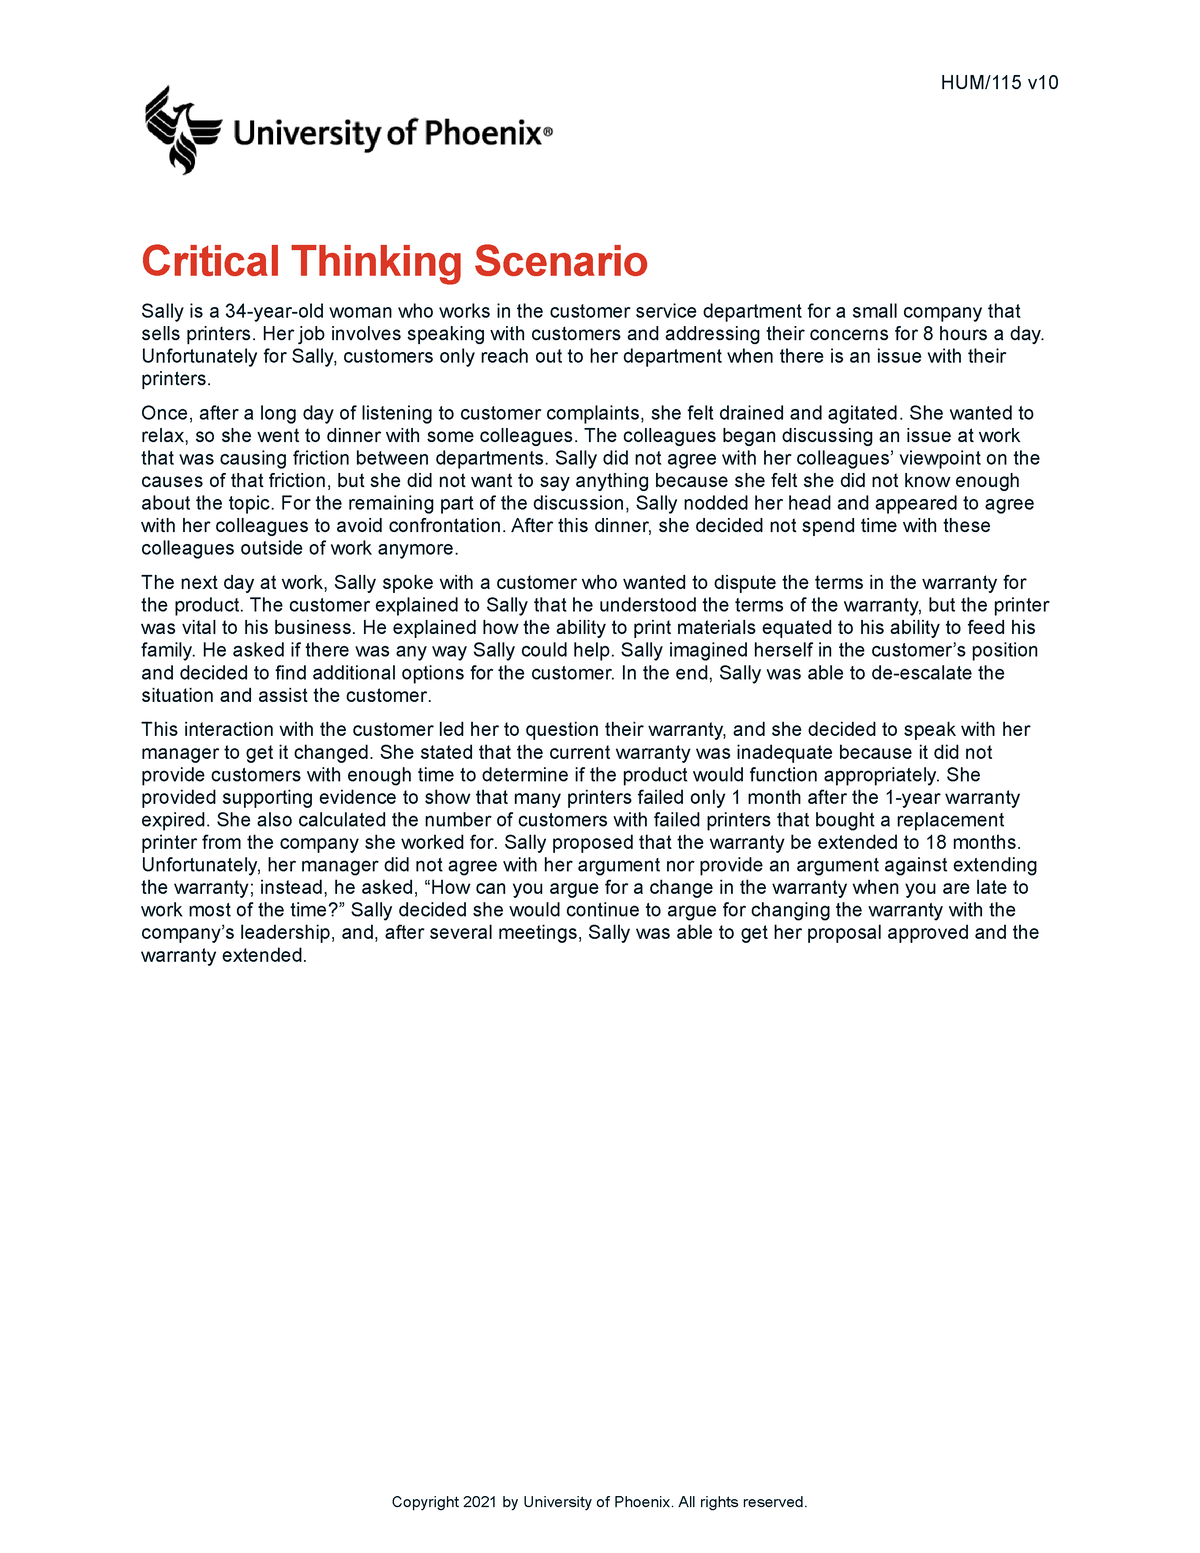 sally critical thinking scenario essay